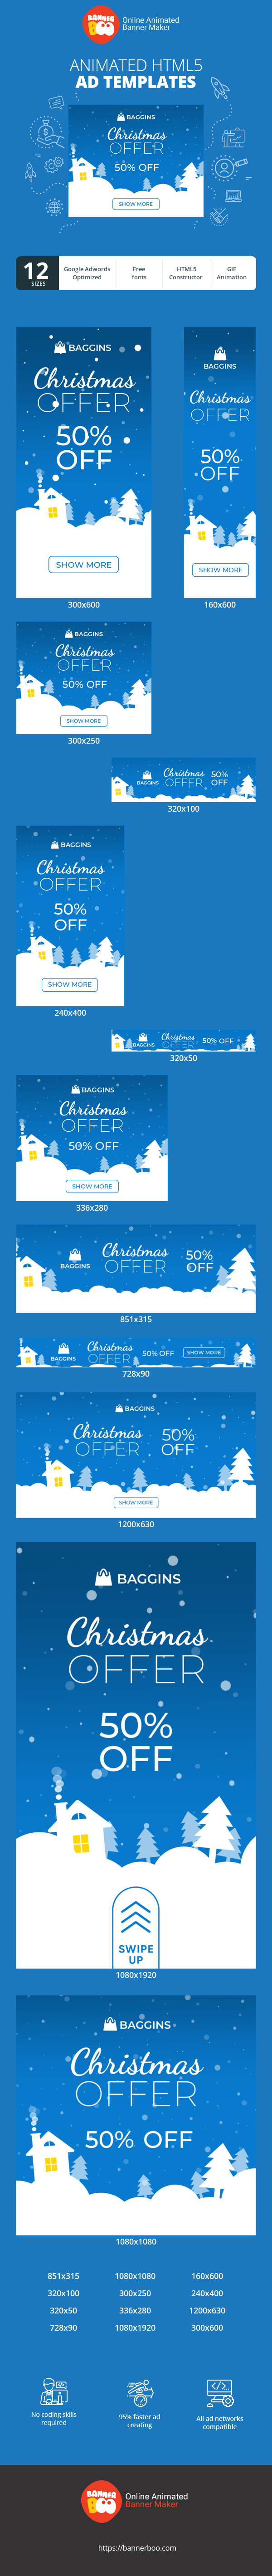 Szablon reklamy banerowej — Christmas Offer — 50% Off